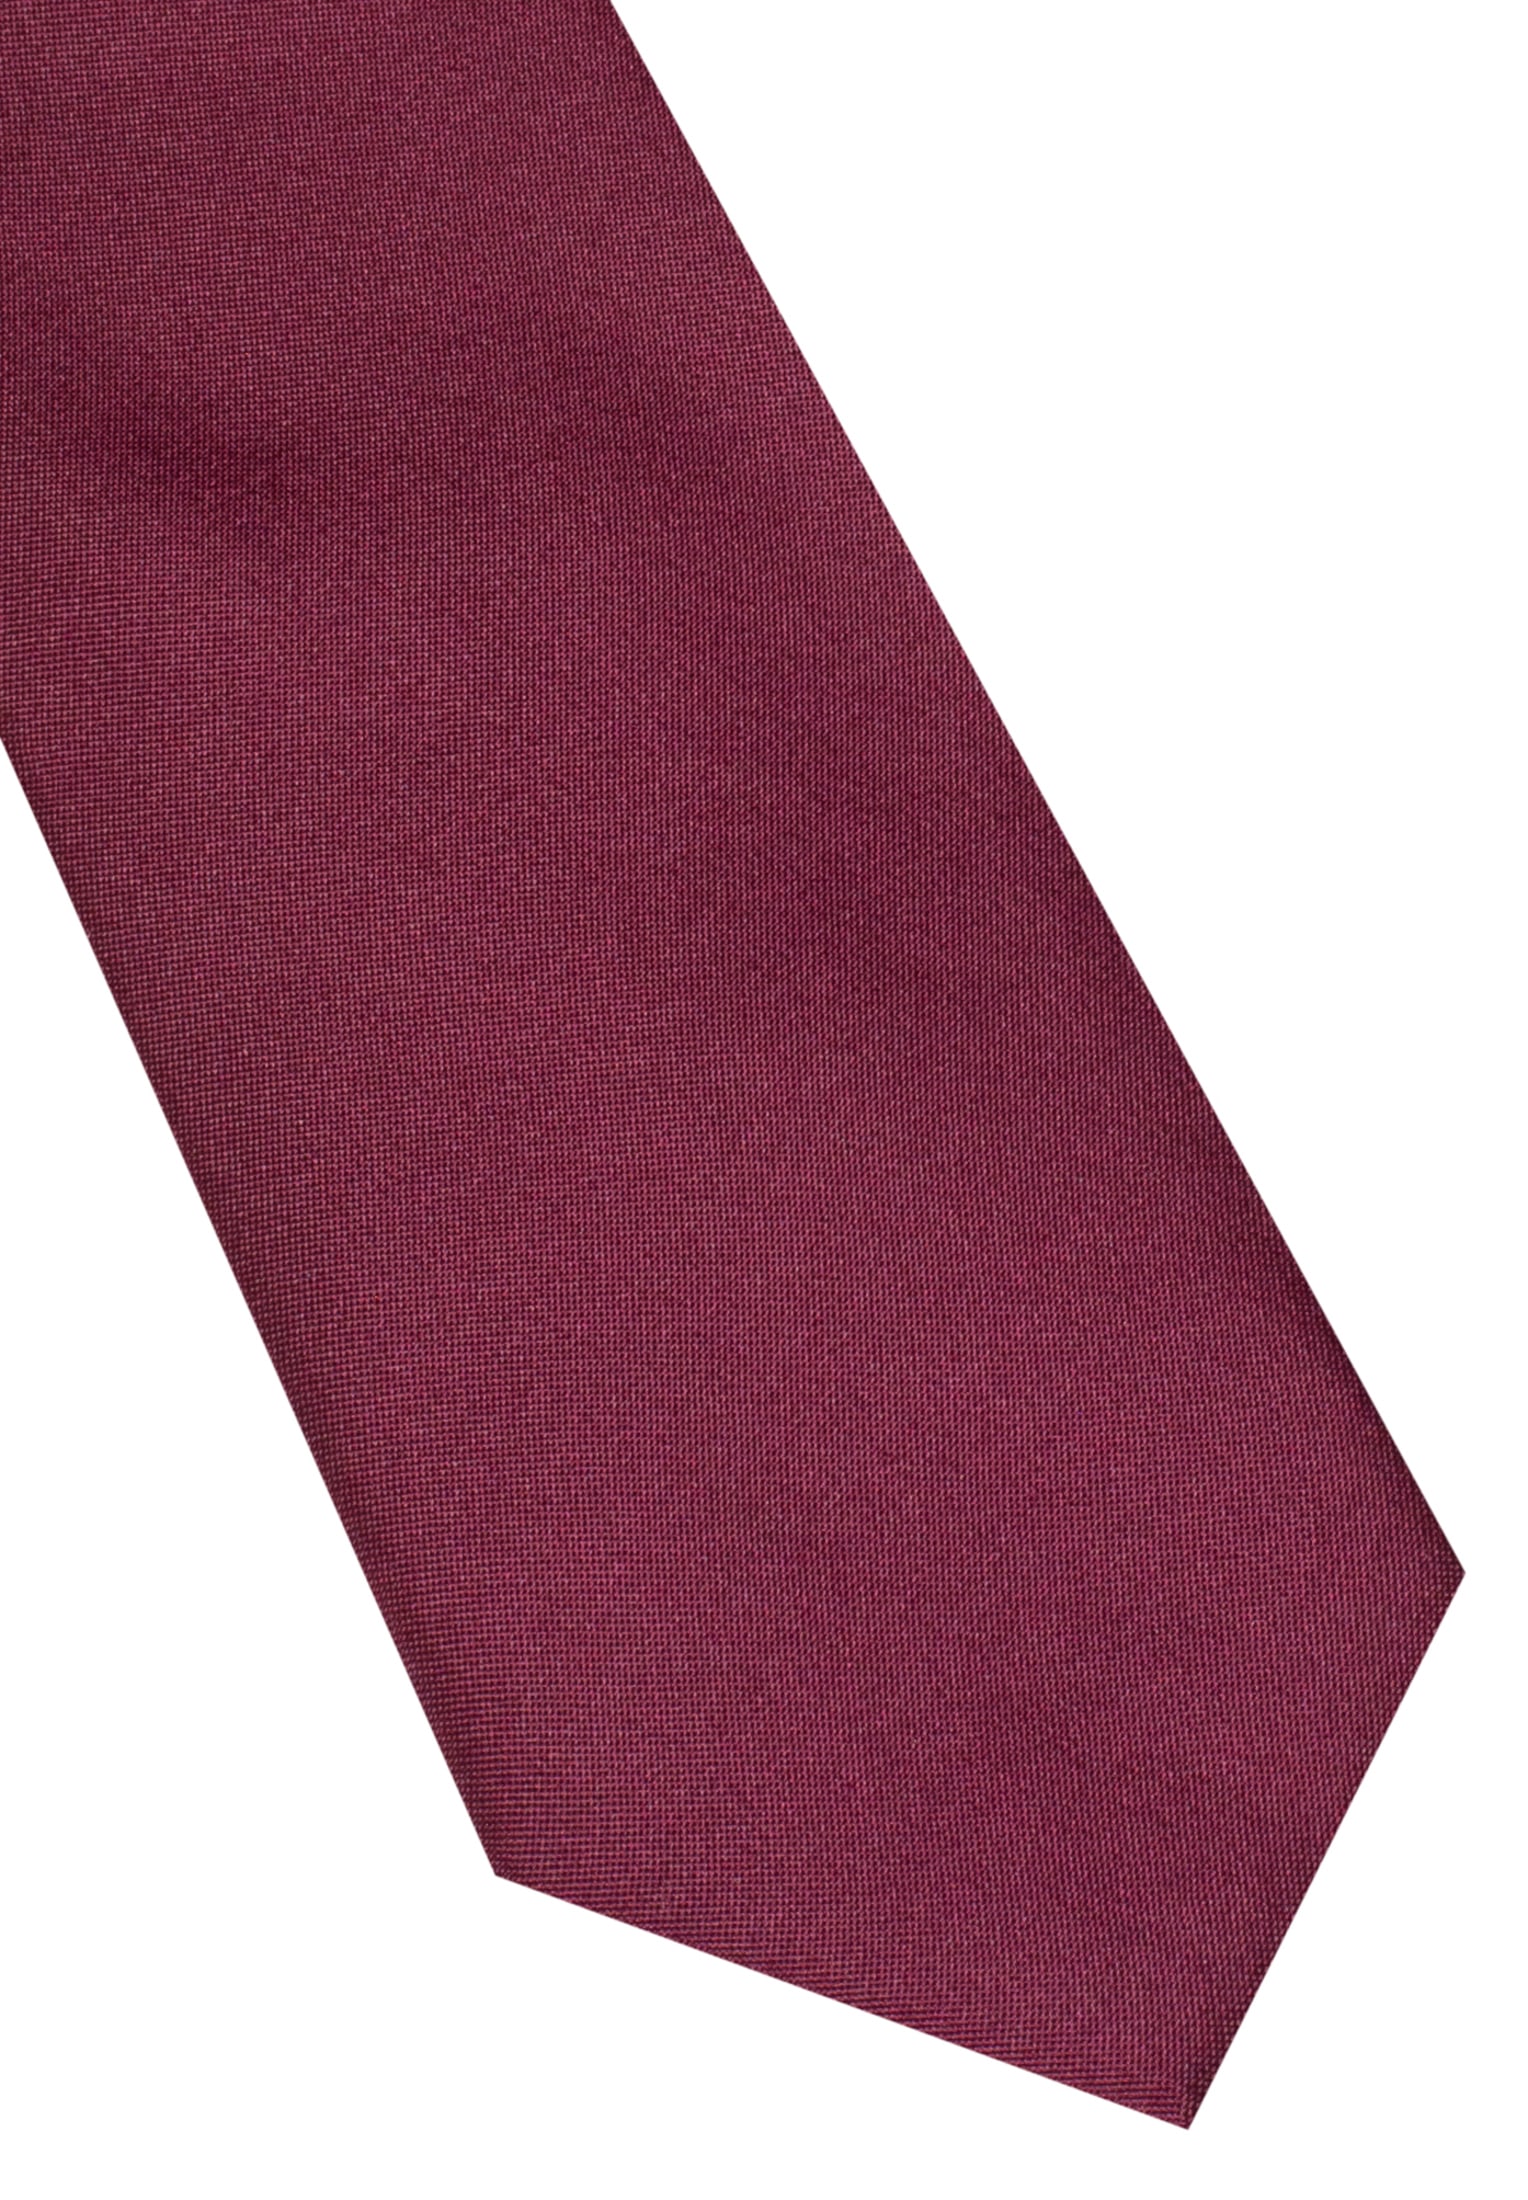 Tie in wine red plain